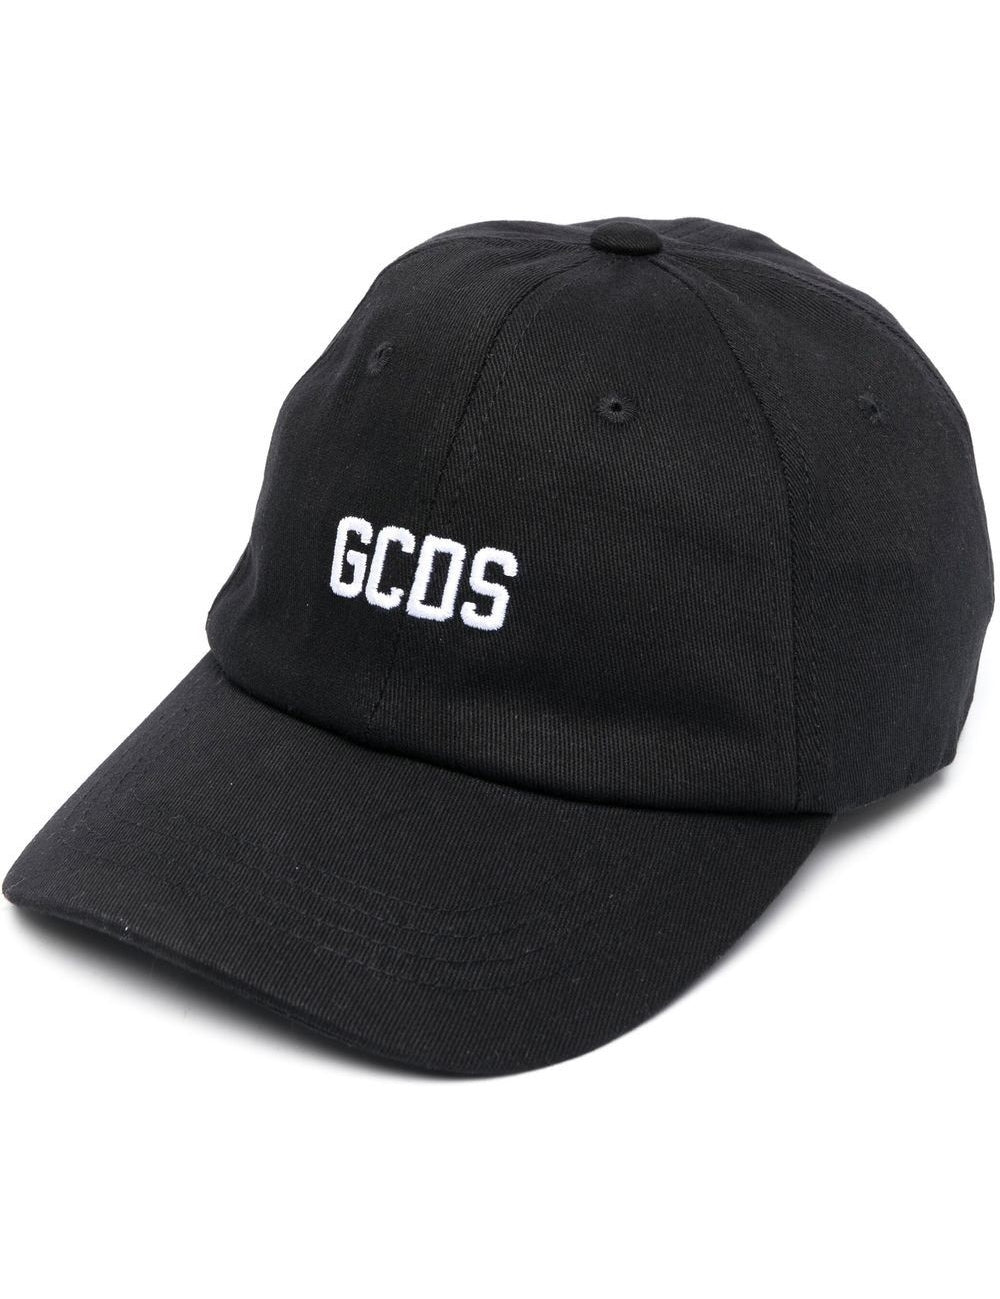 gcds-essential-baseball-hat.jpg